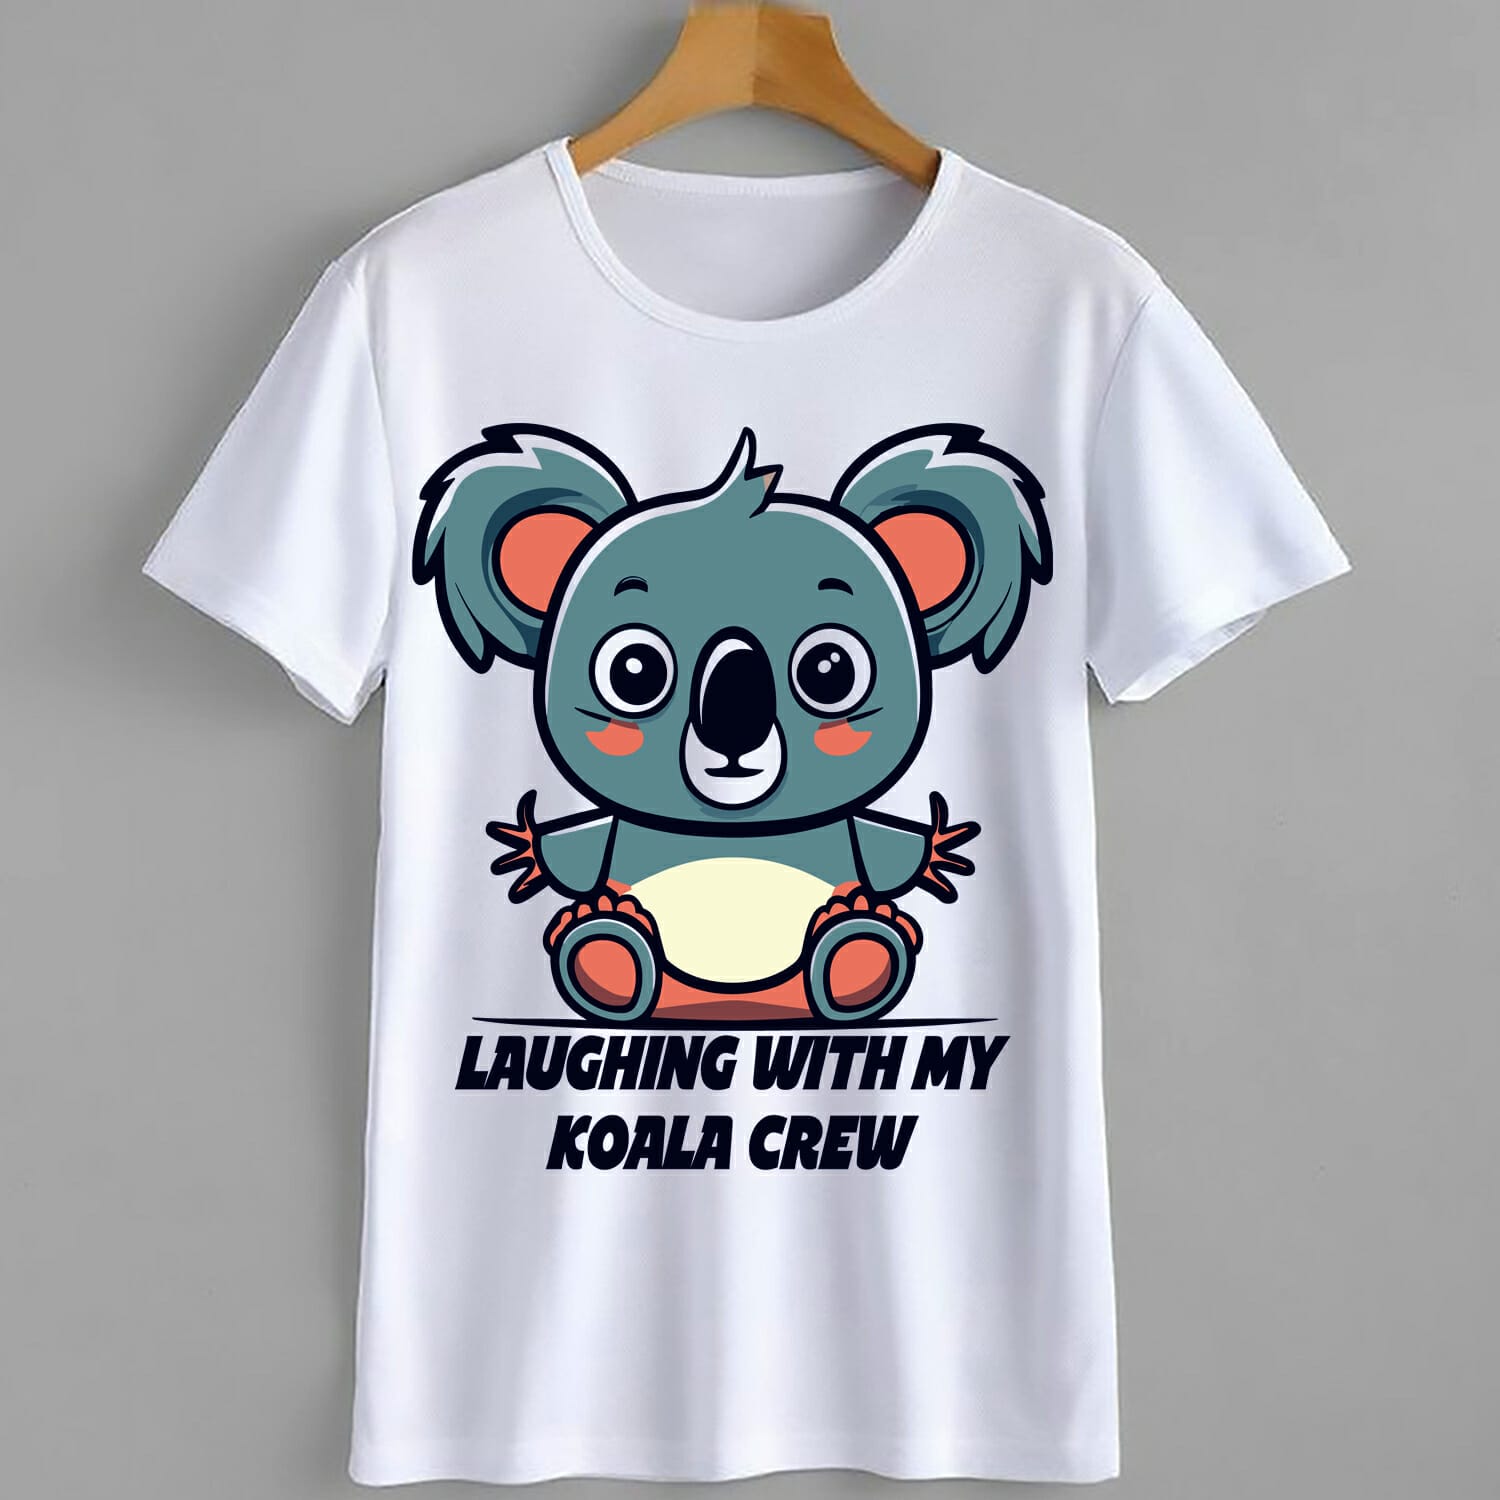 Laughing With My Koala Crew T-Shirt Design